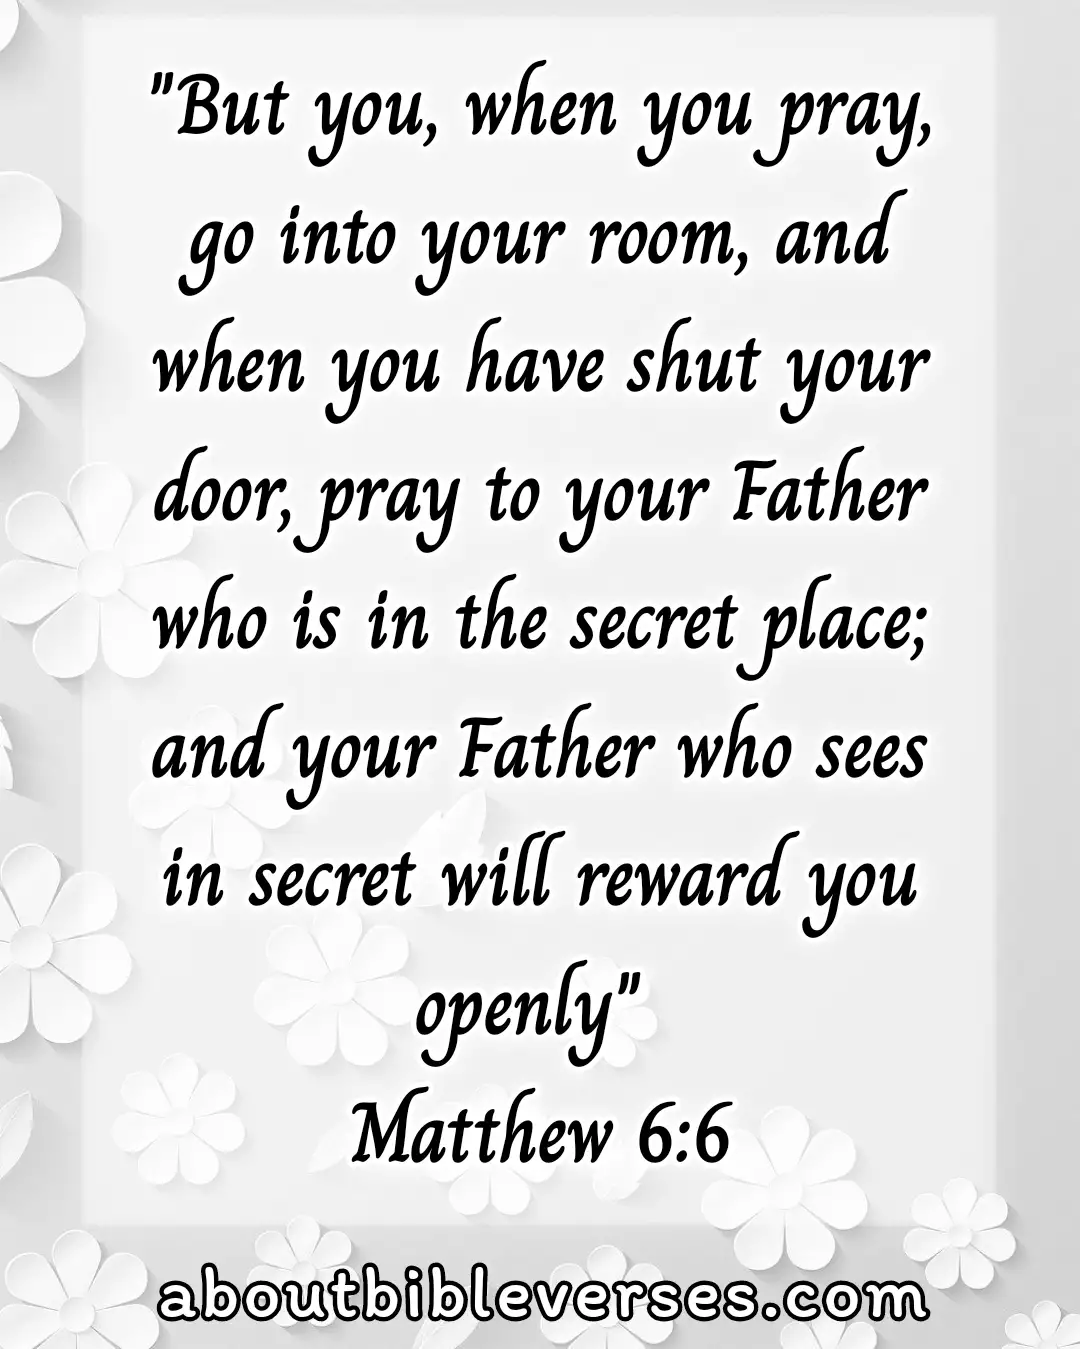 today bible verse (Matthew 6:6)